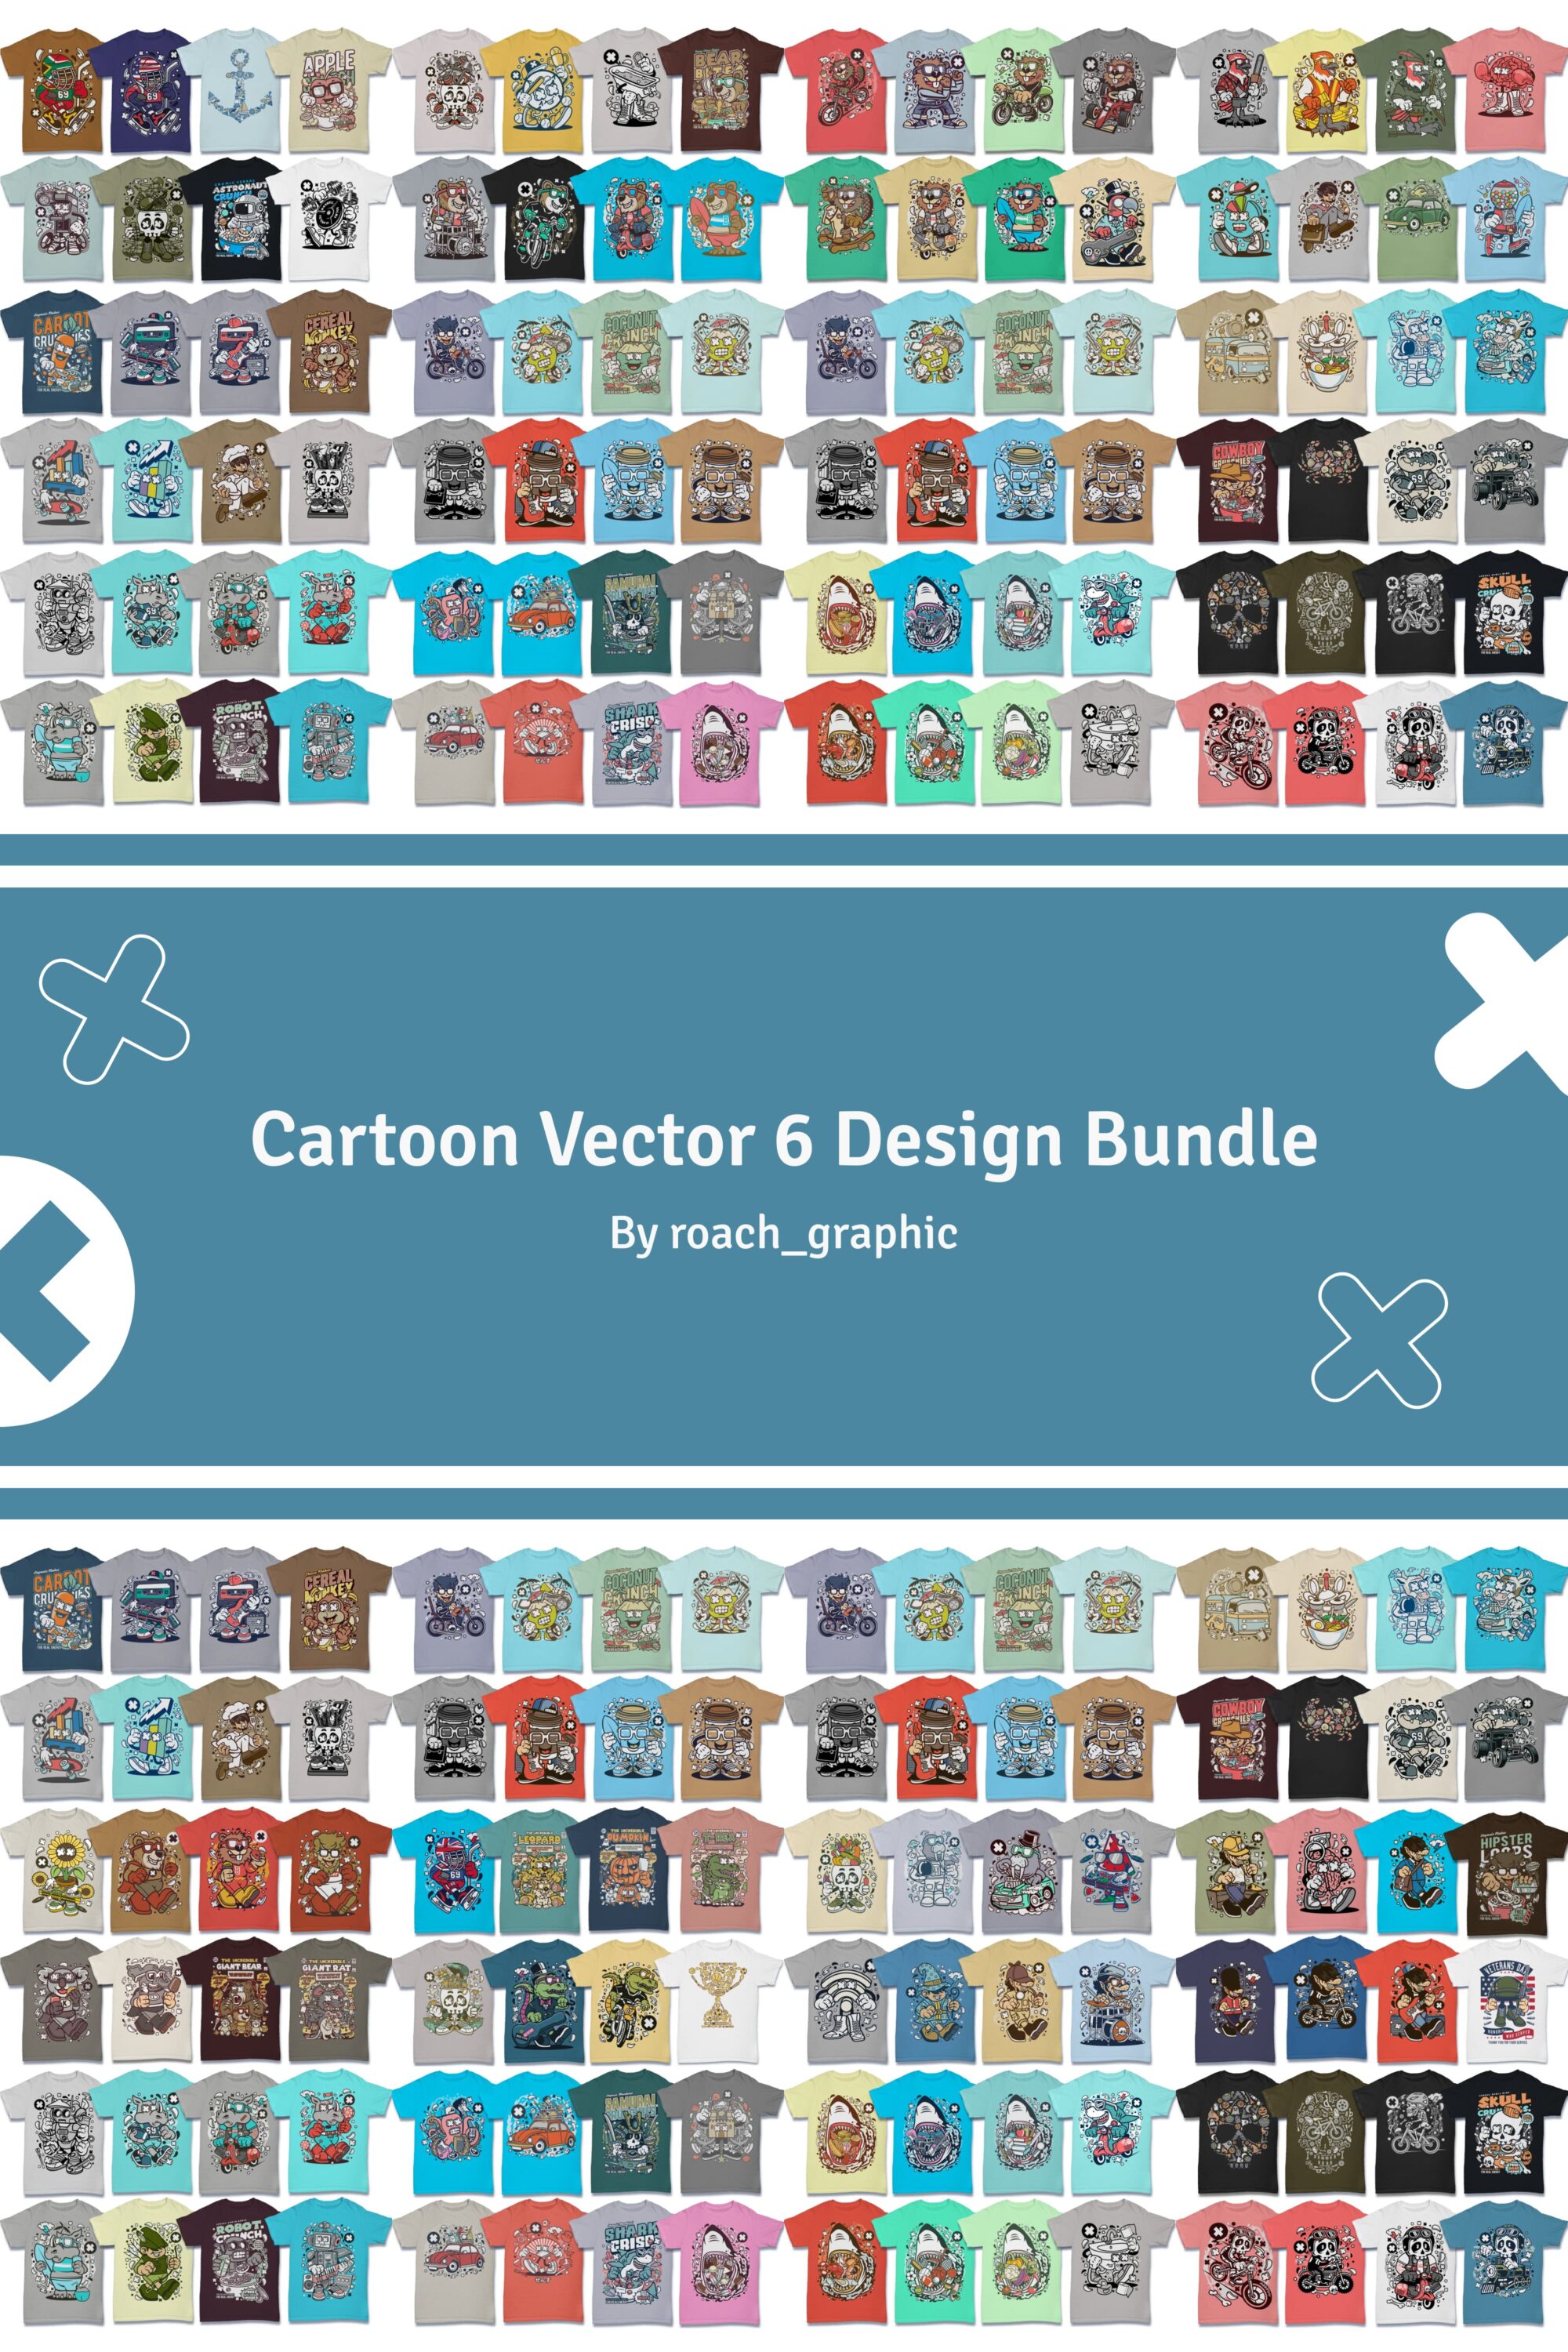 Cartoon Vector #6 Design Bundle pinterest image.